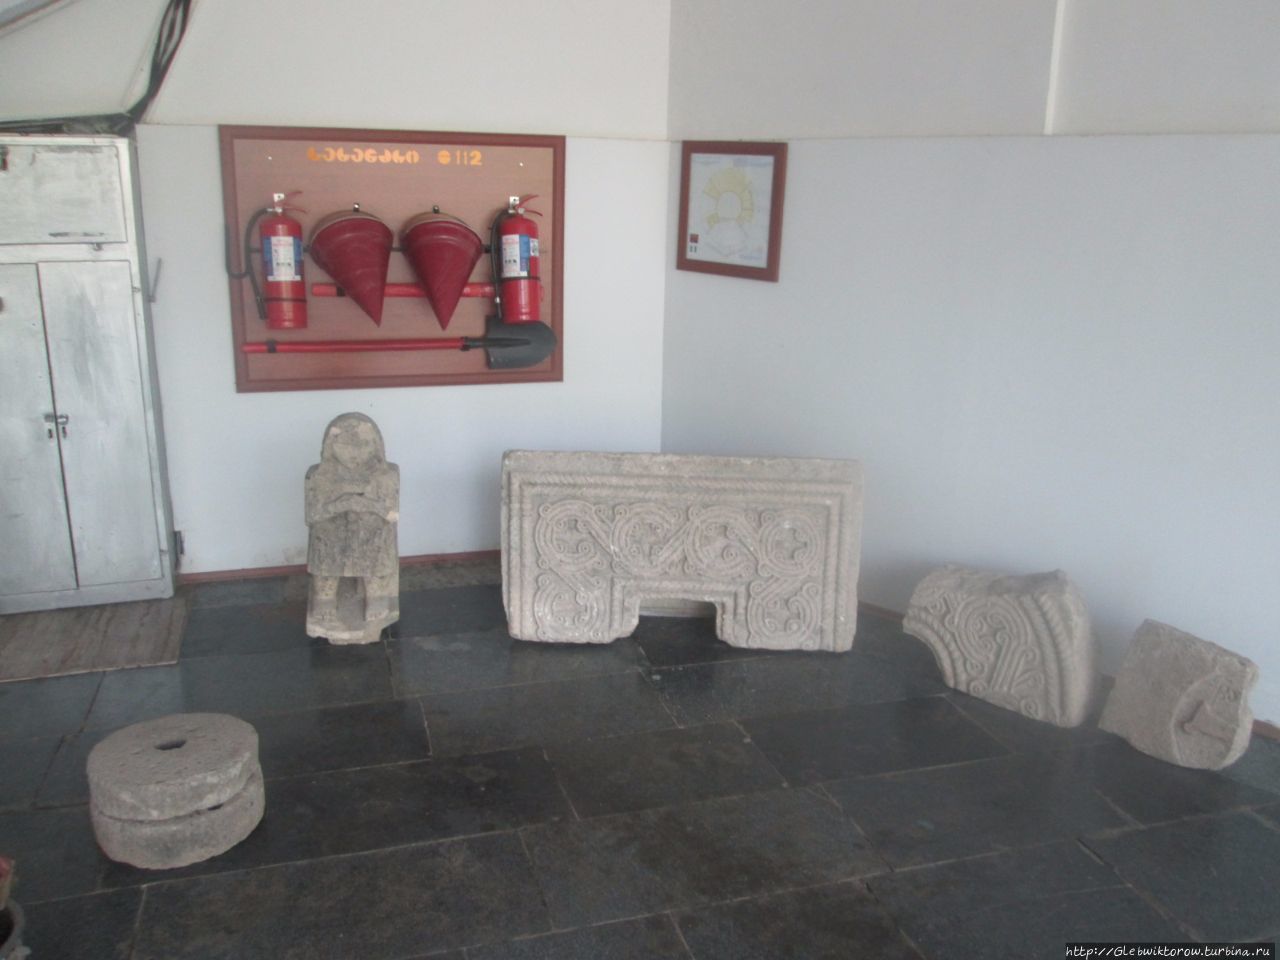 Краеведческий музей Цхалтубо Цхалтубо, Грузия